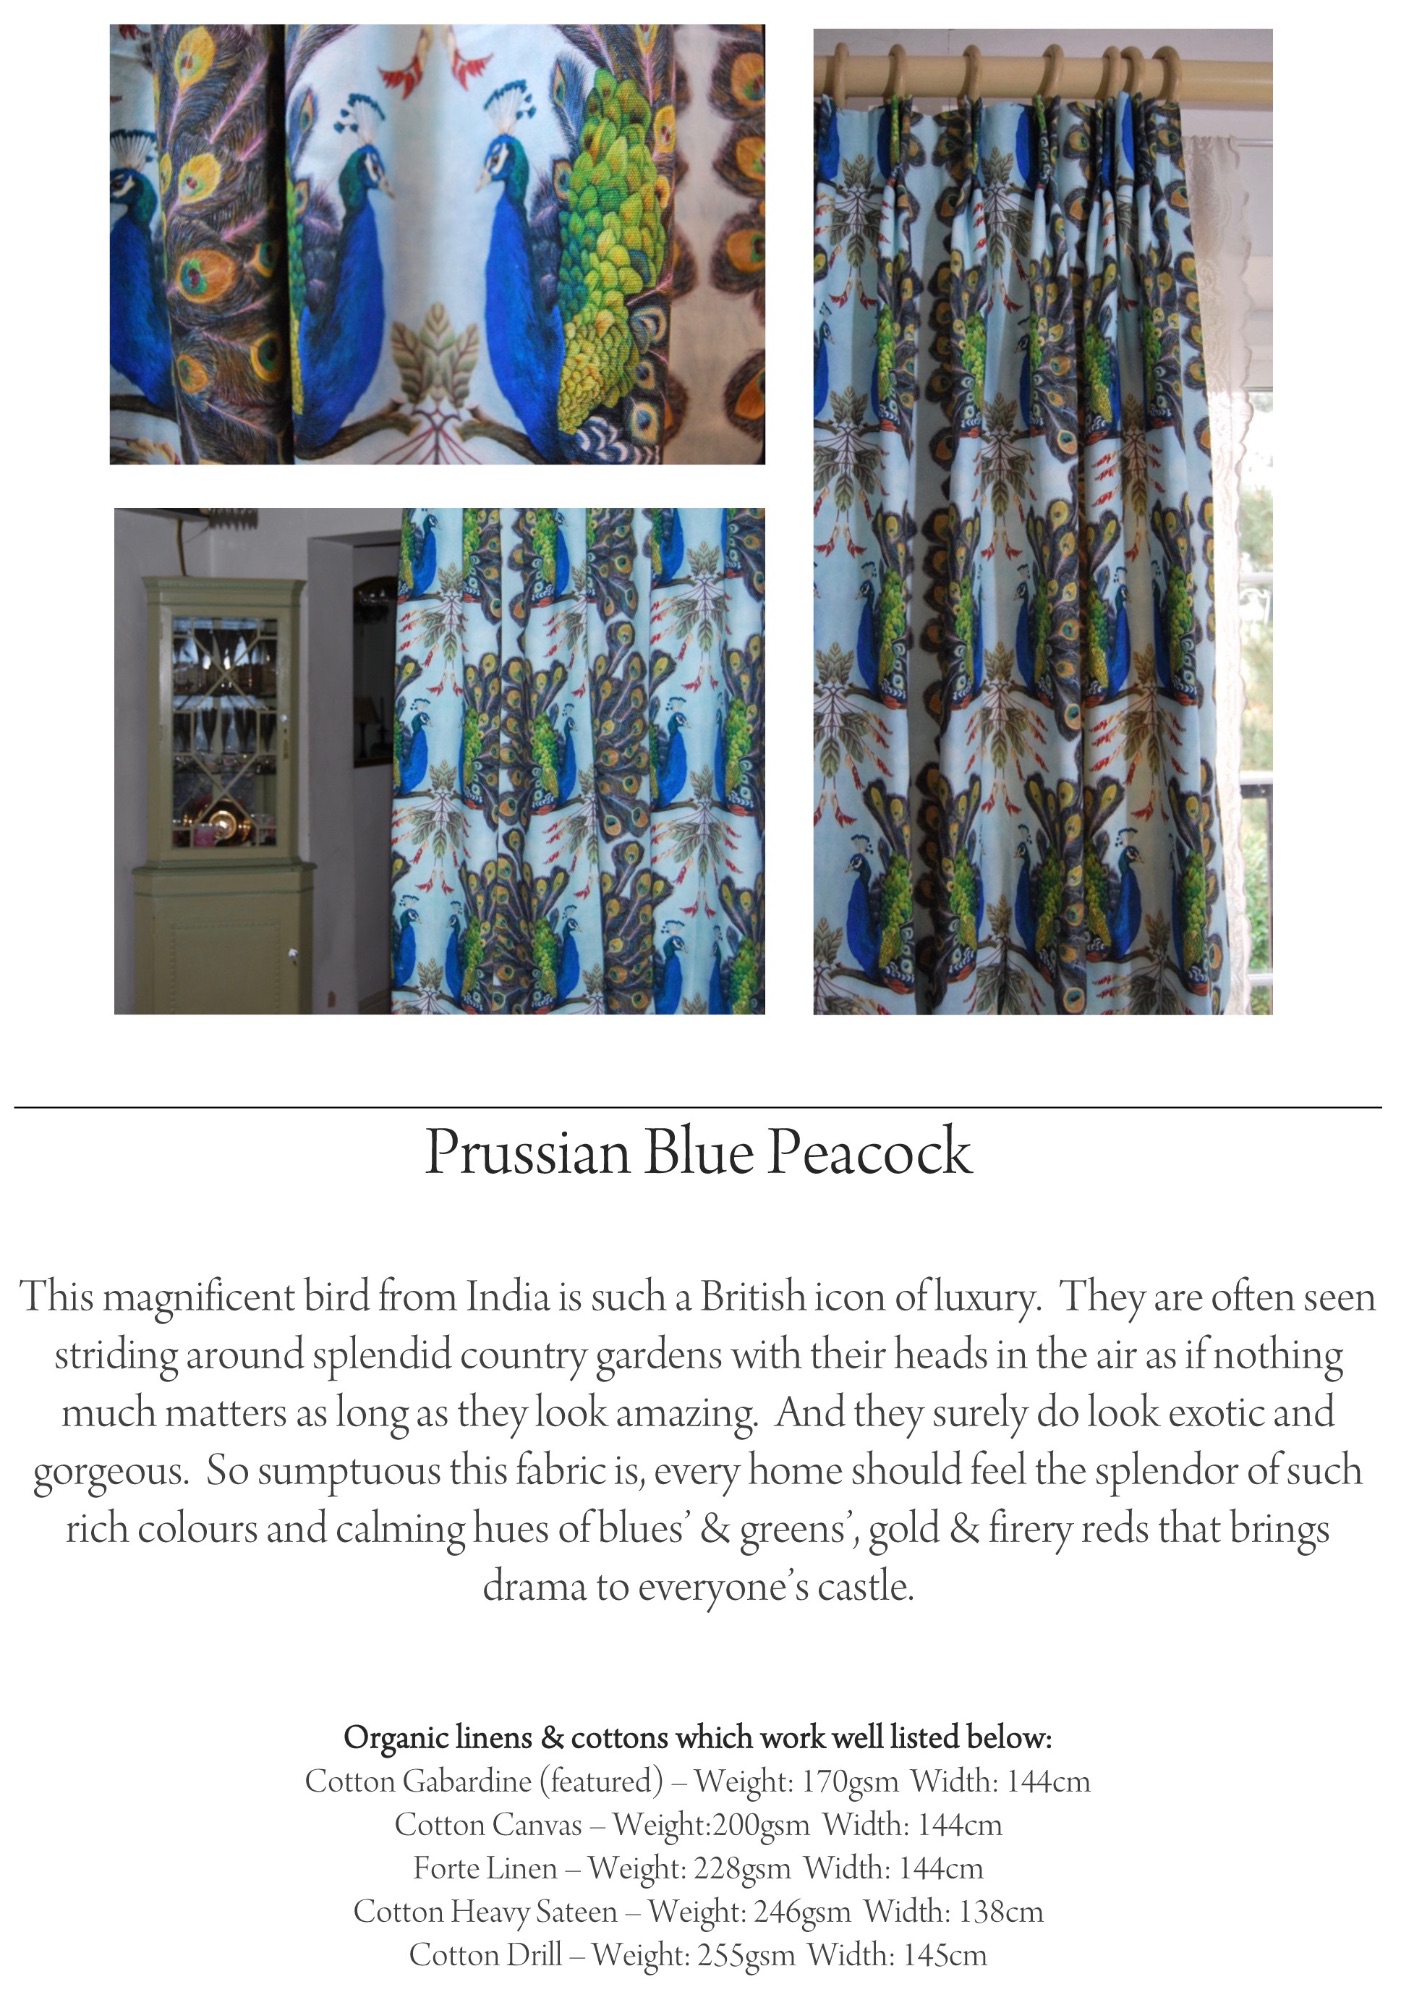 Prussian peacock